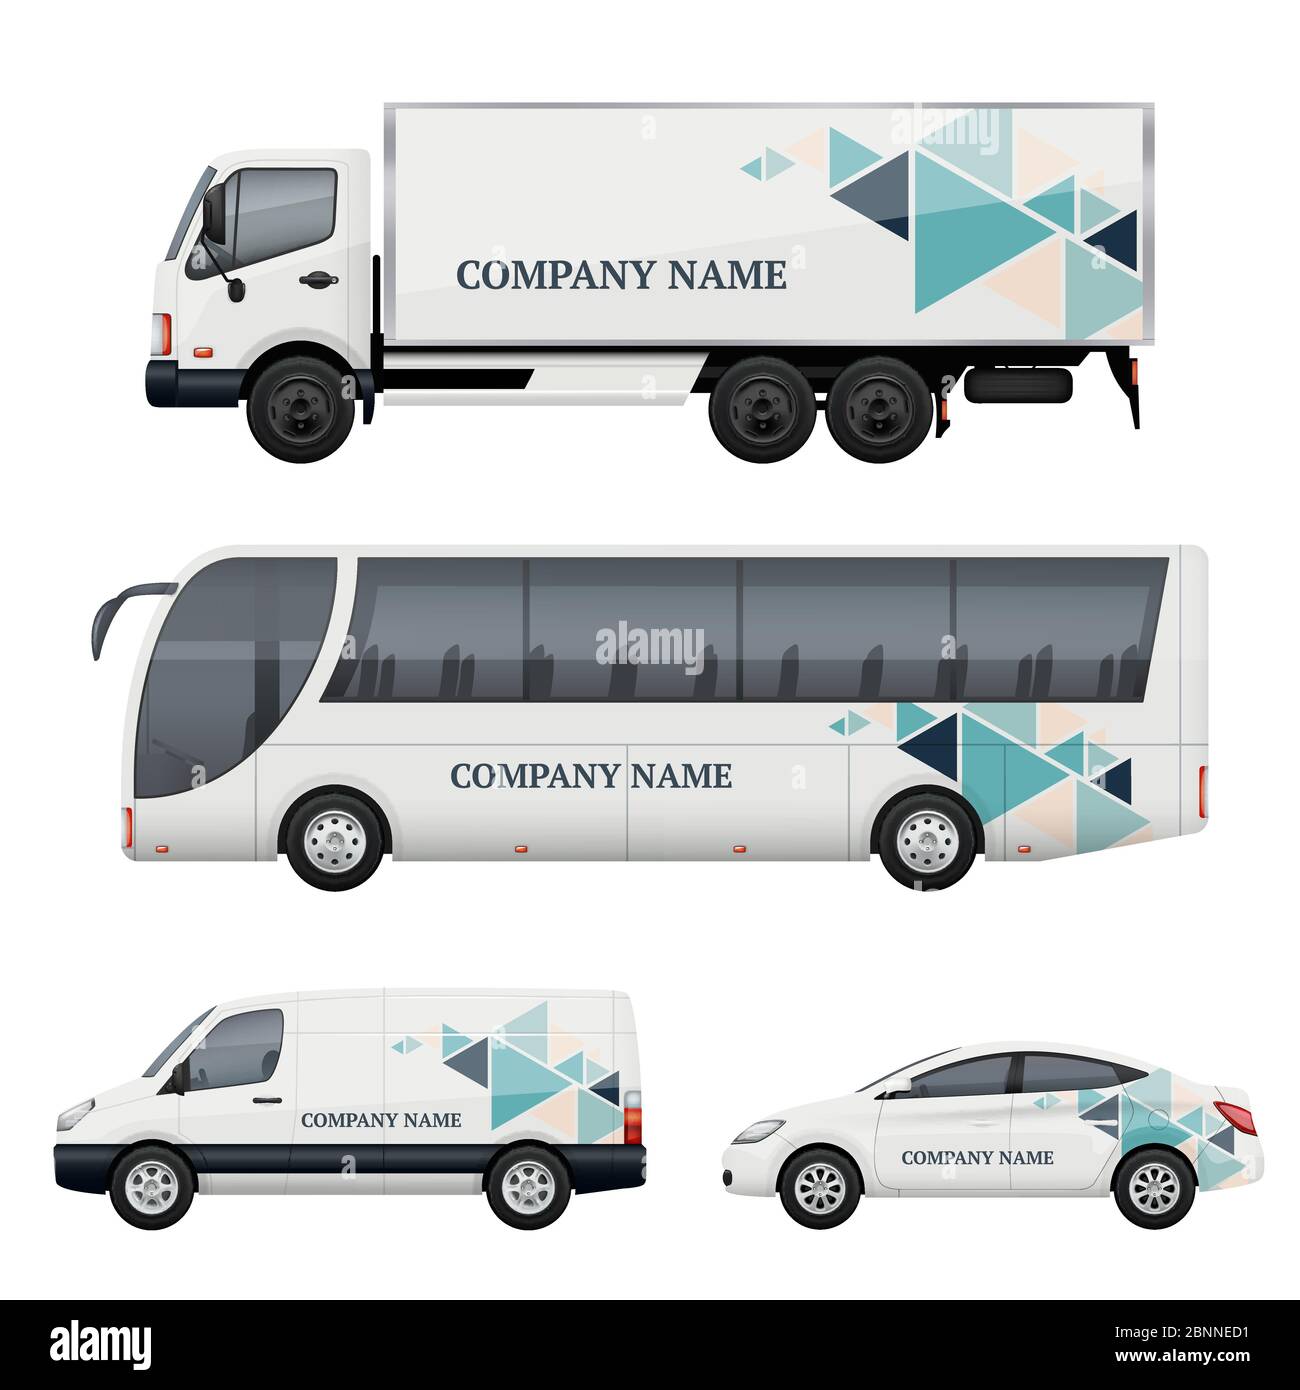 Vehicle branding. Transportation advertizing bus truck van car realistic vector mockup Stock Vector